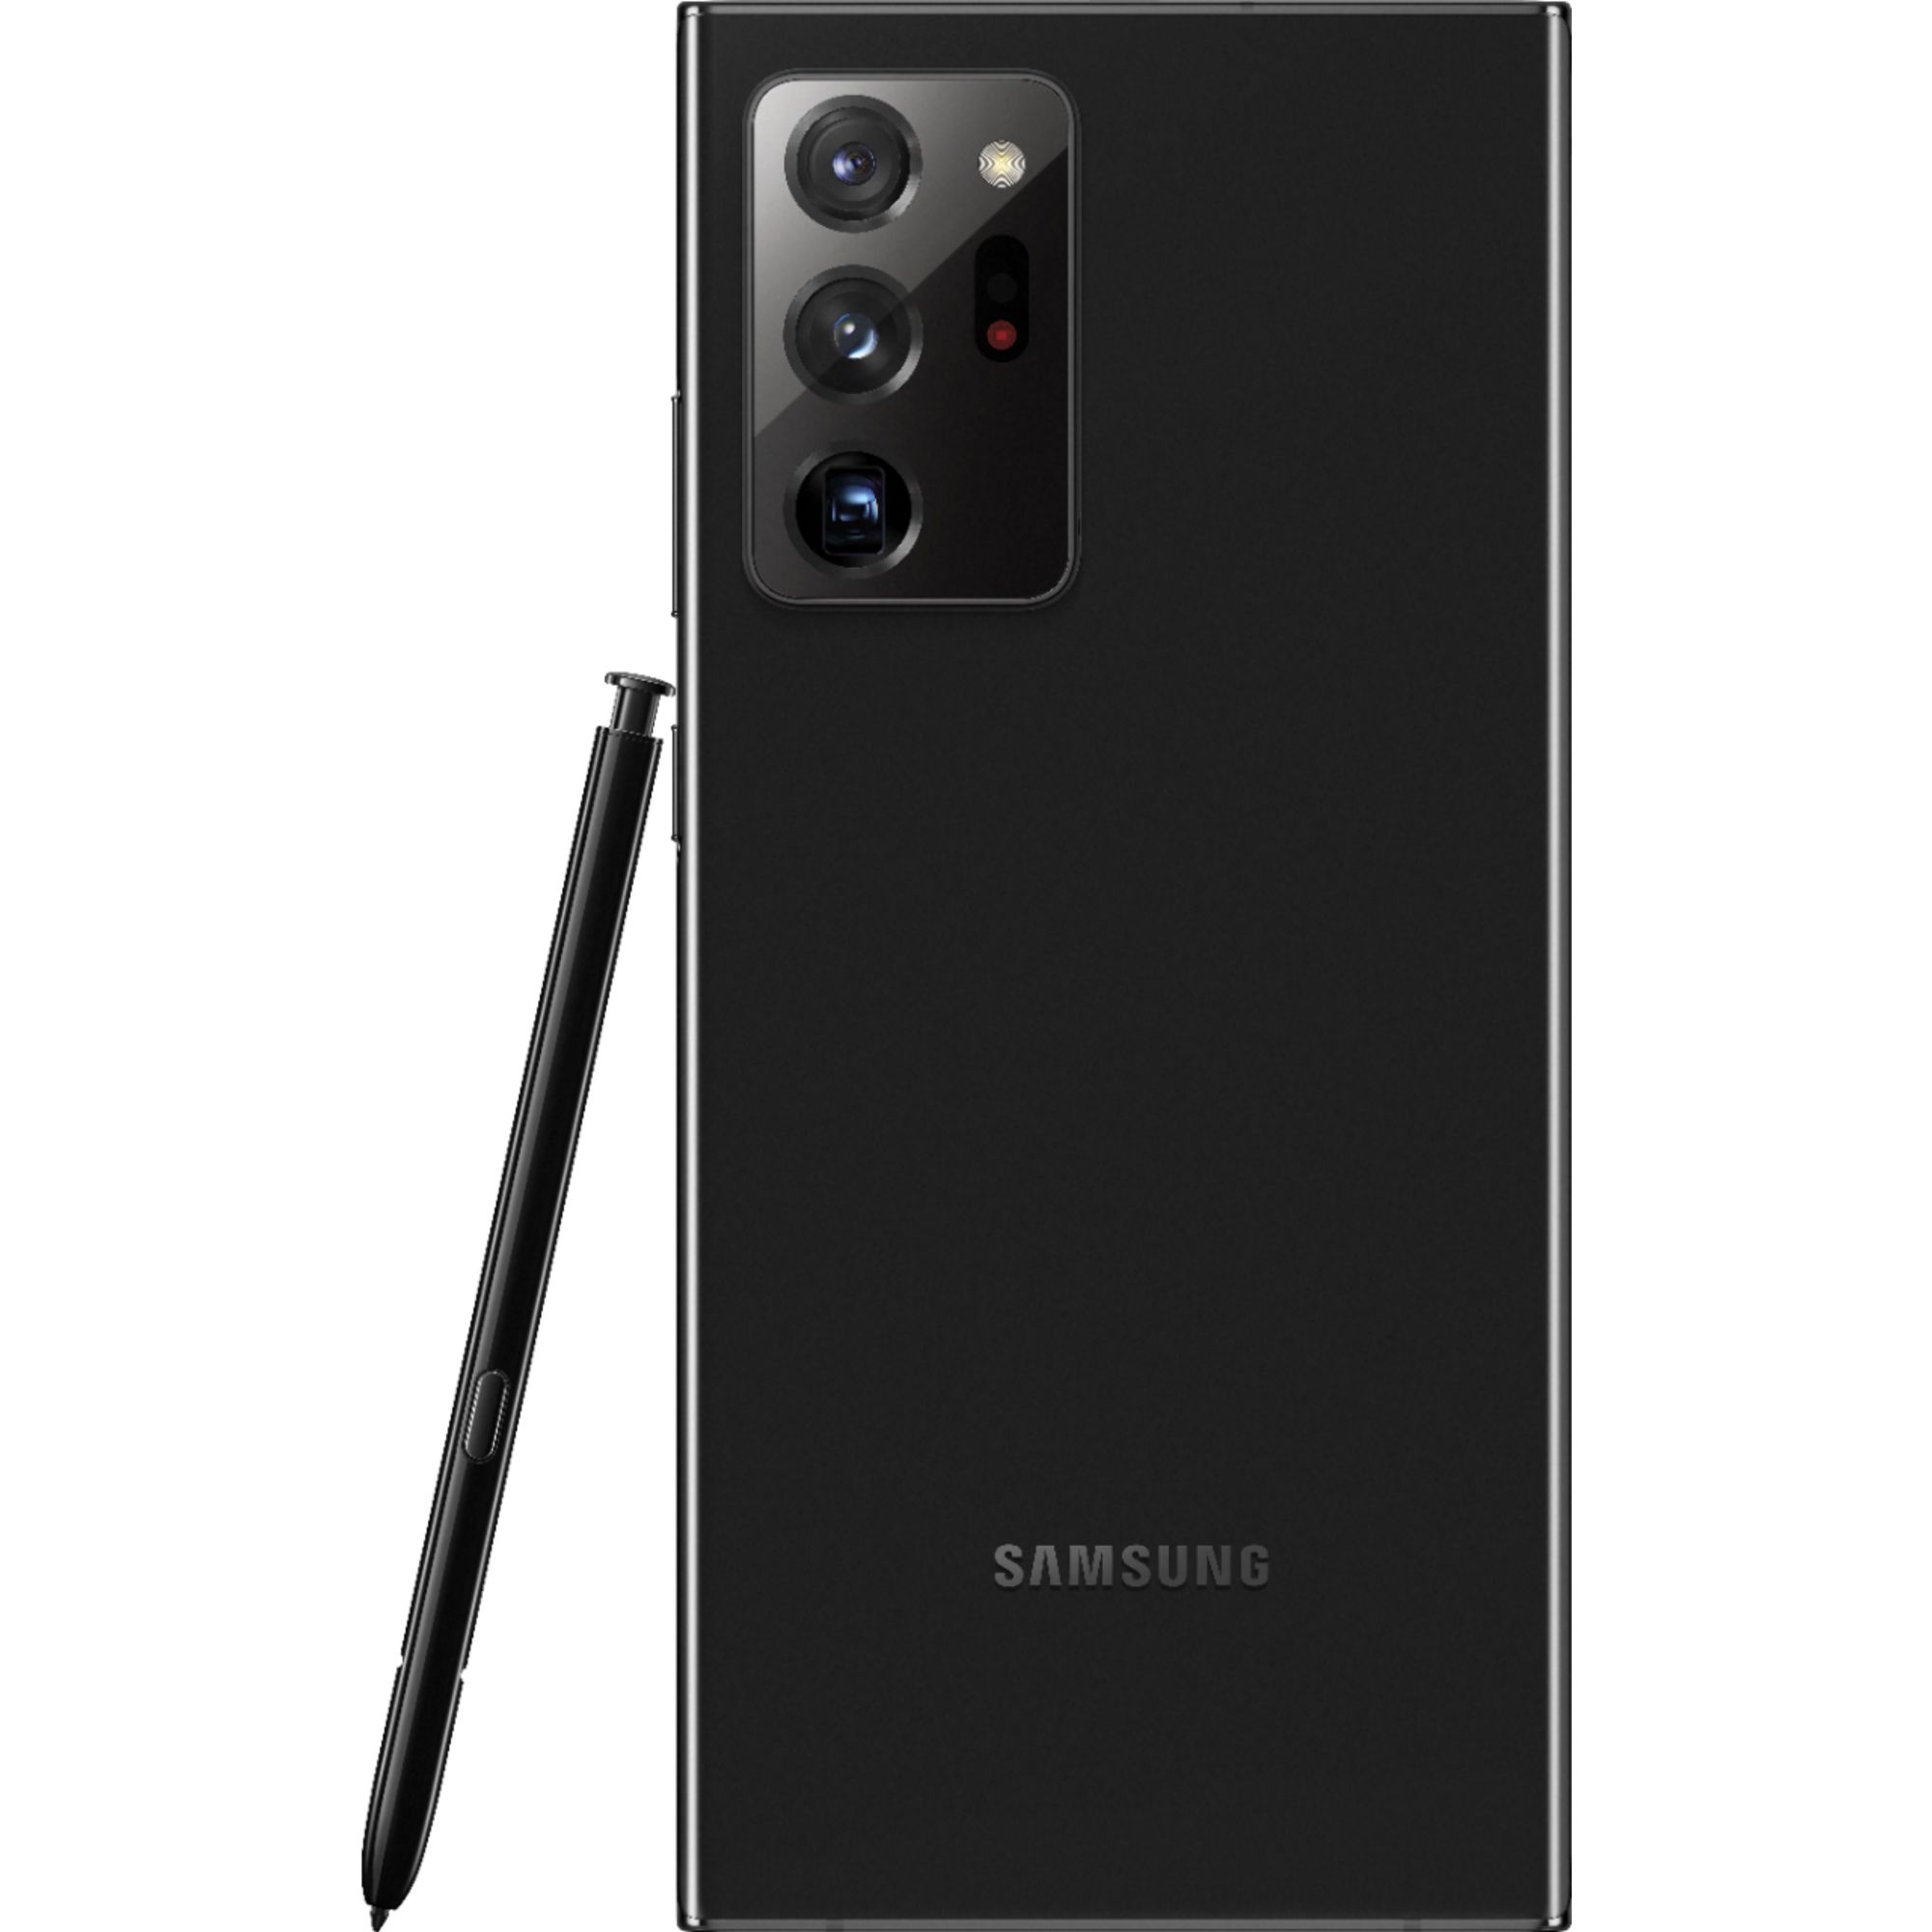 Samsung Galaxy Note20 Ultra N985F 256GB Hybrid Dual SIM Unlocked GSM Smartphone (International Variant/US Compatible LTE) - Mystic Black - image 2 of 4